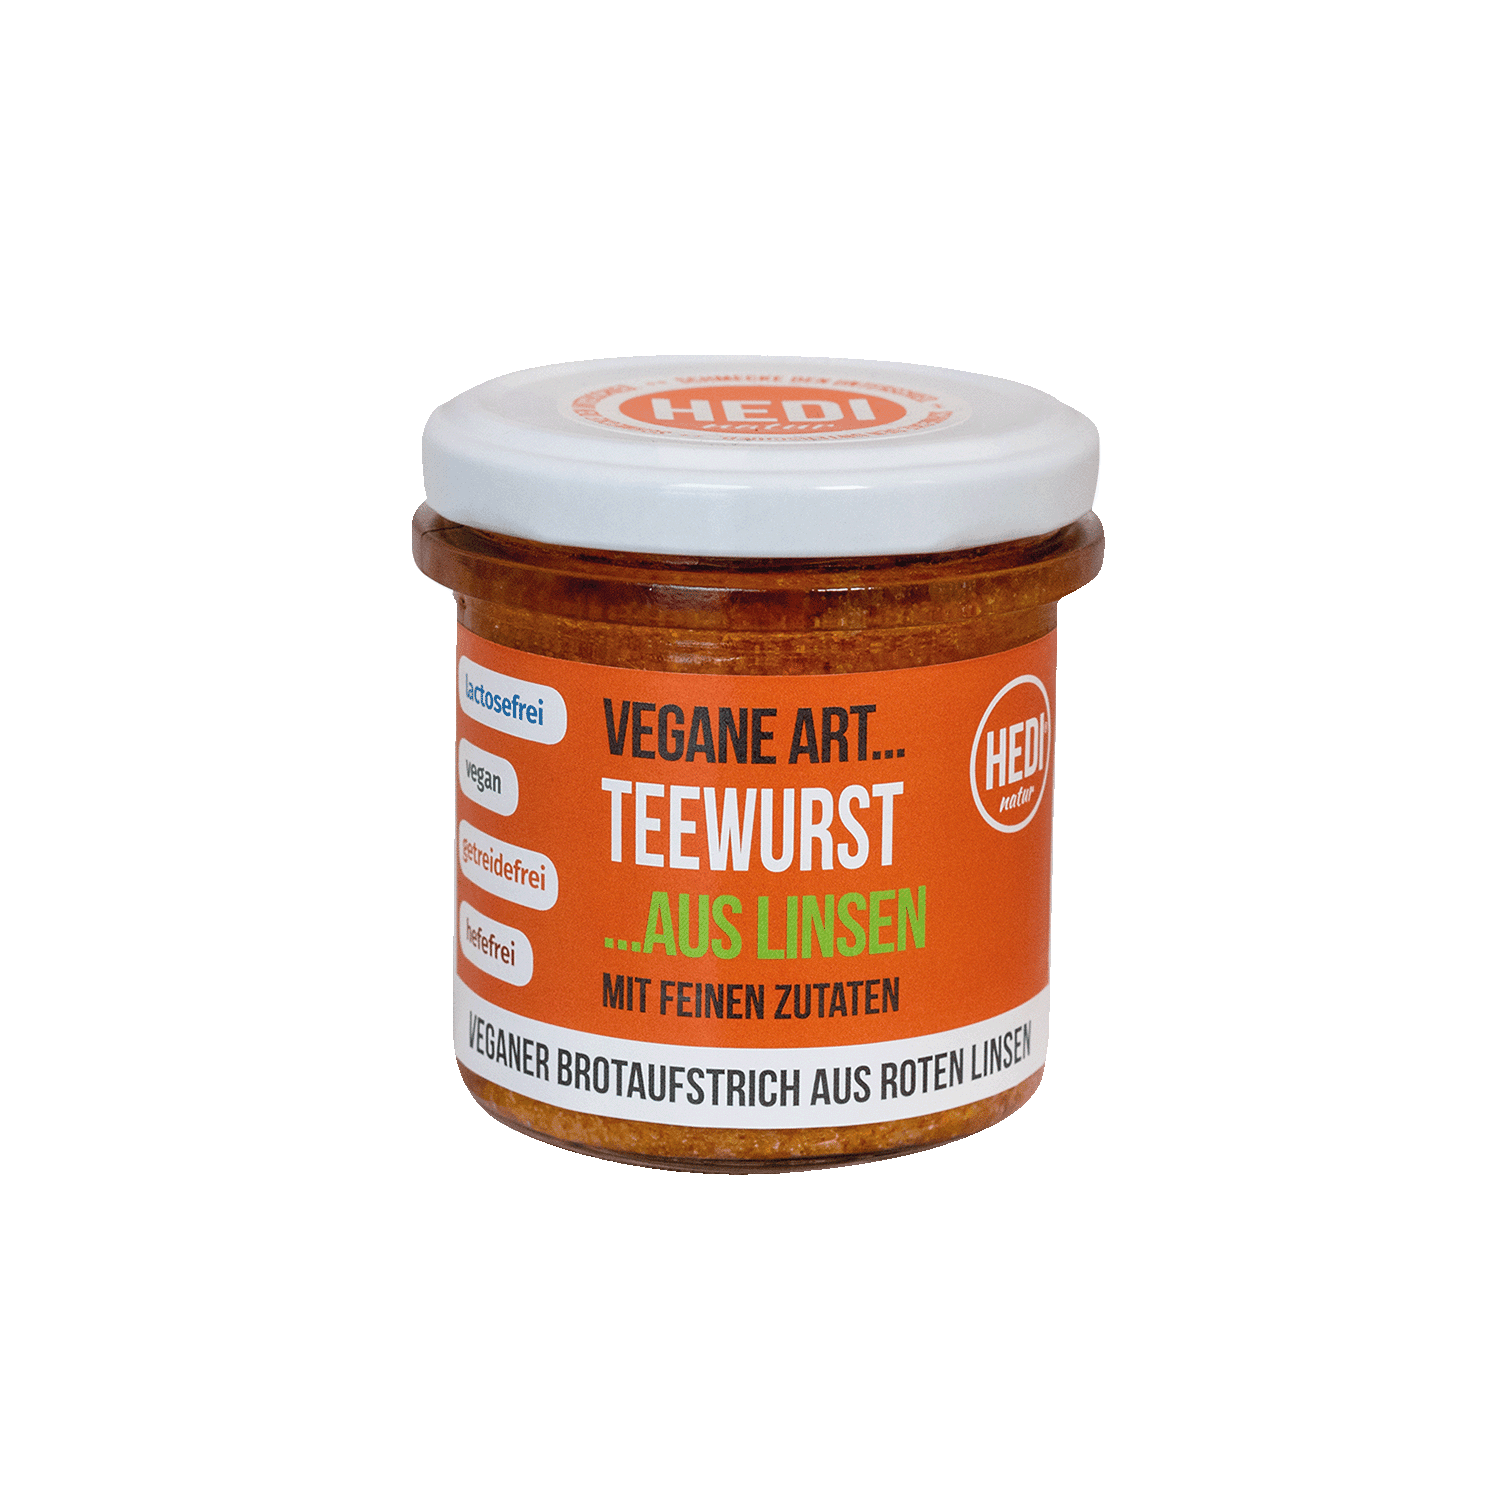 Vegan Style "Teewurst" Made From Lentils, Organic, 140g